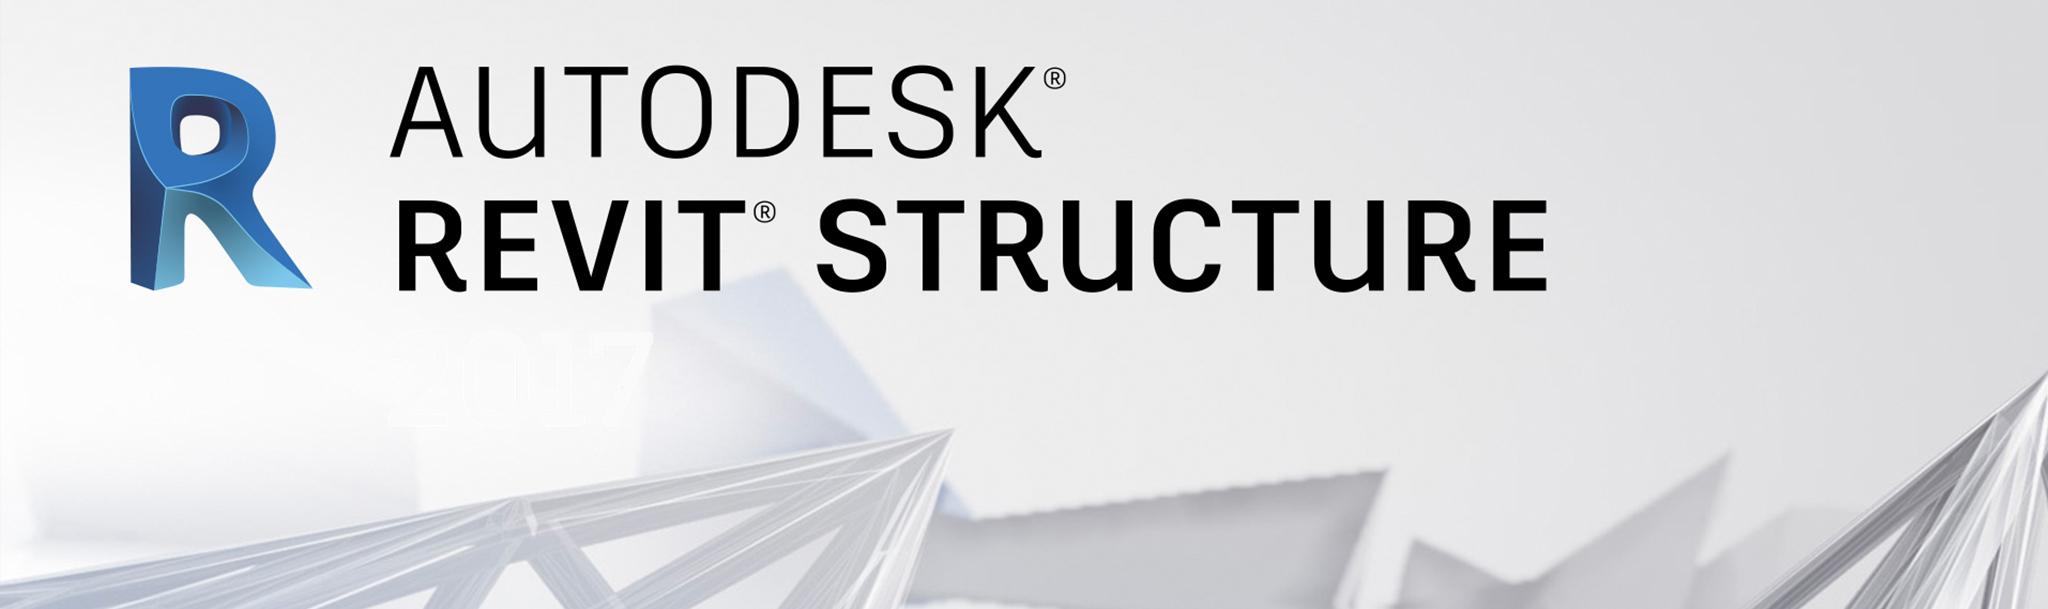 Structure Logo - Autodesk Revit Essentials (Structure)